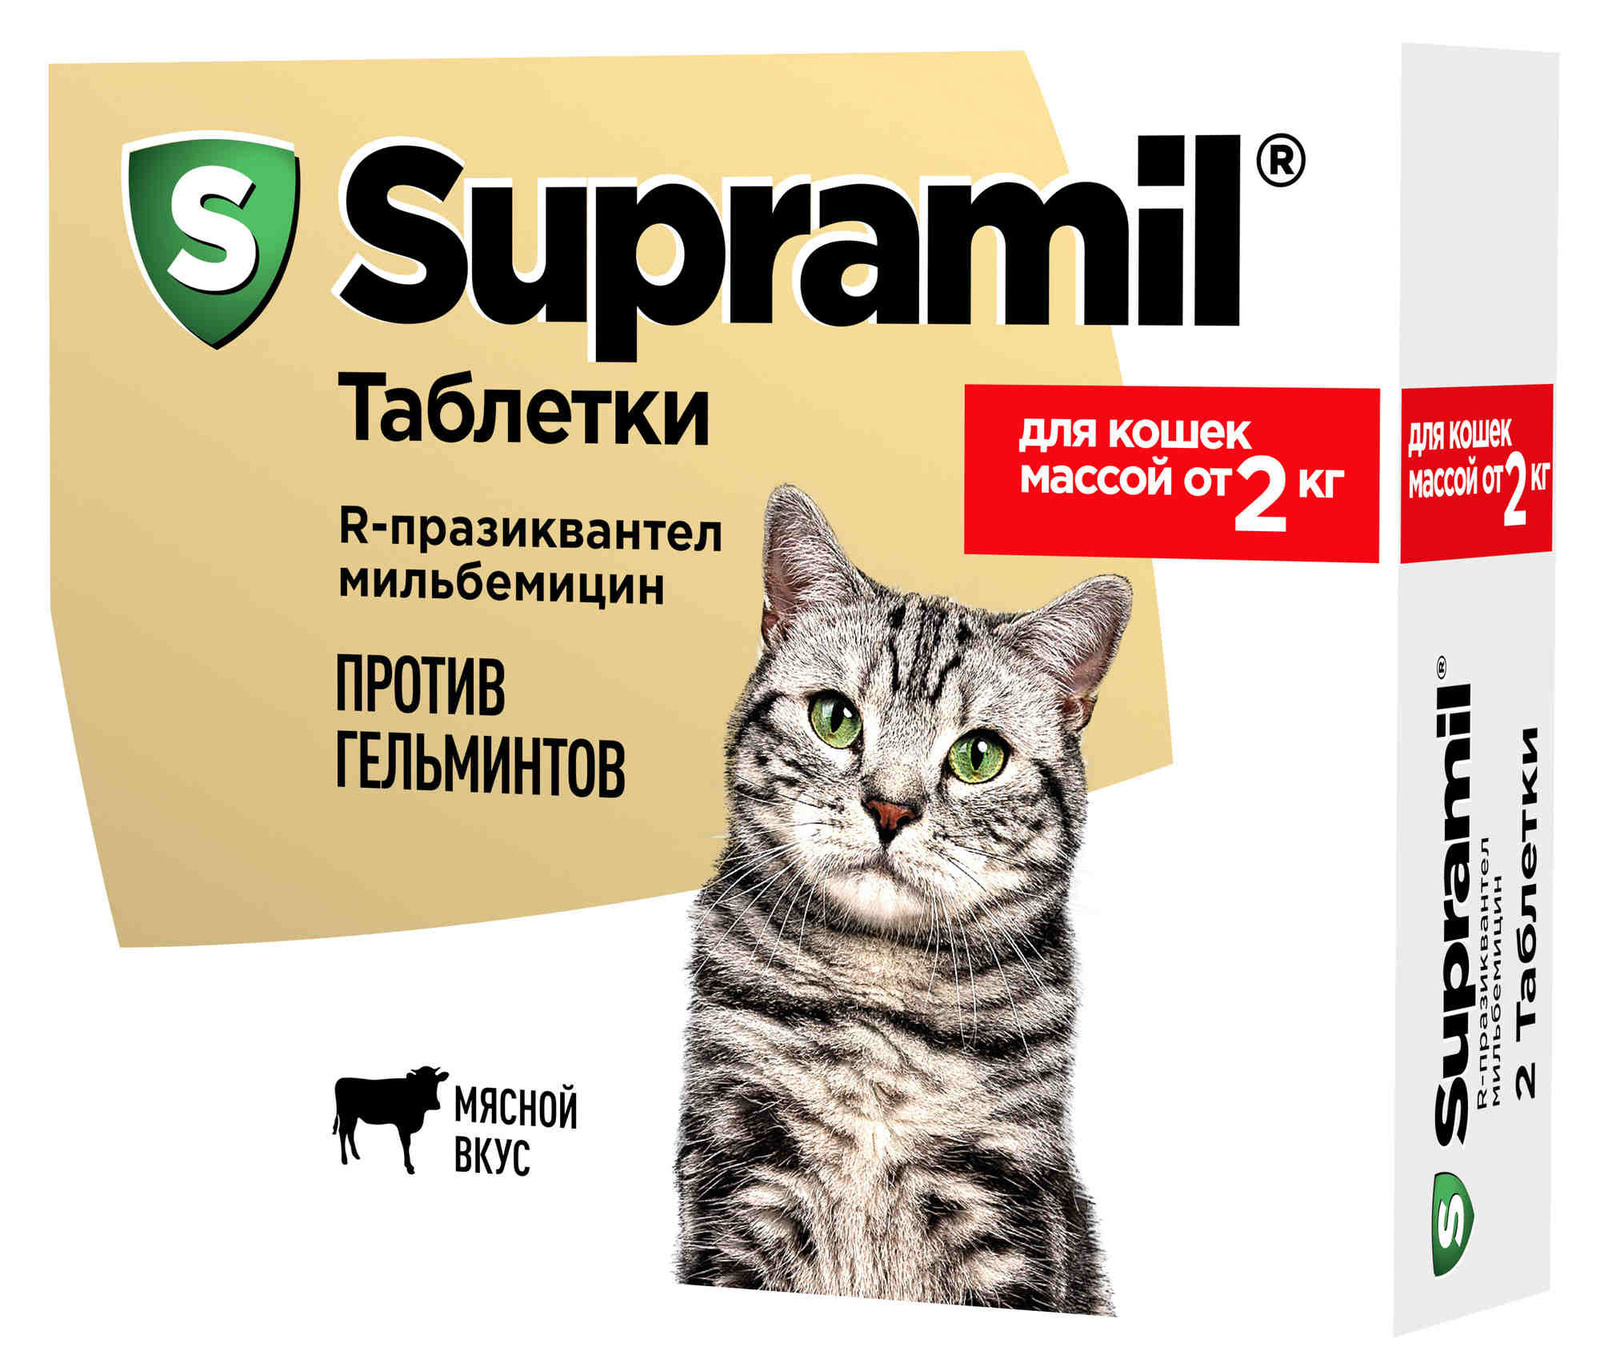 Астрафарм Астрафарм антигельминтный препарат Supramil для кошек массой от 2 кг (таблетки) (20 г) крка жевательные таблетки кладакса антибактериальный препарат широкого спектра 250 мг мг 0 03 кг 3 штуки